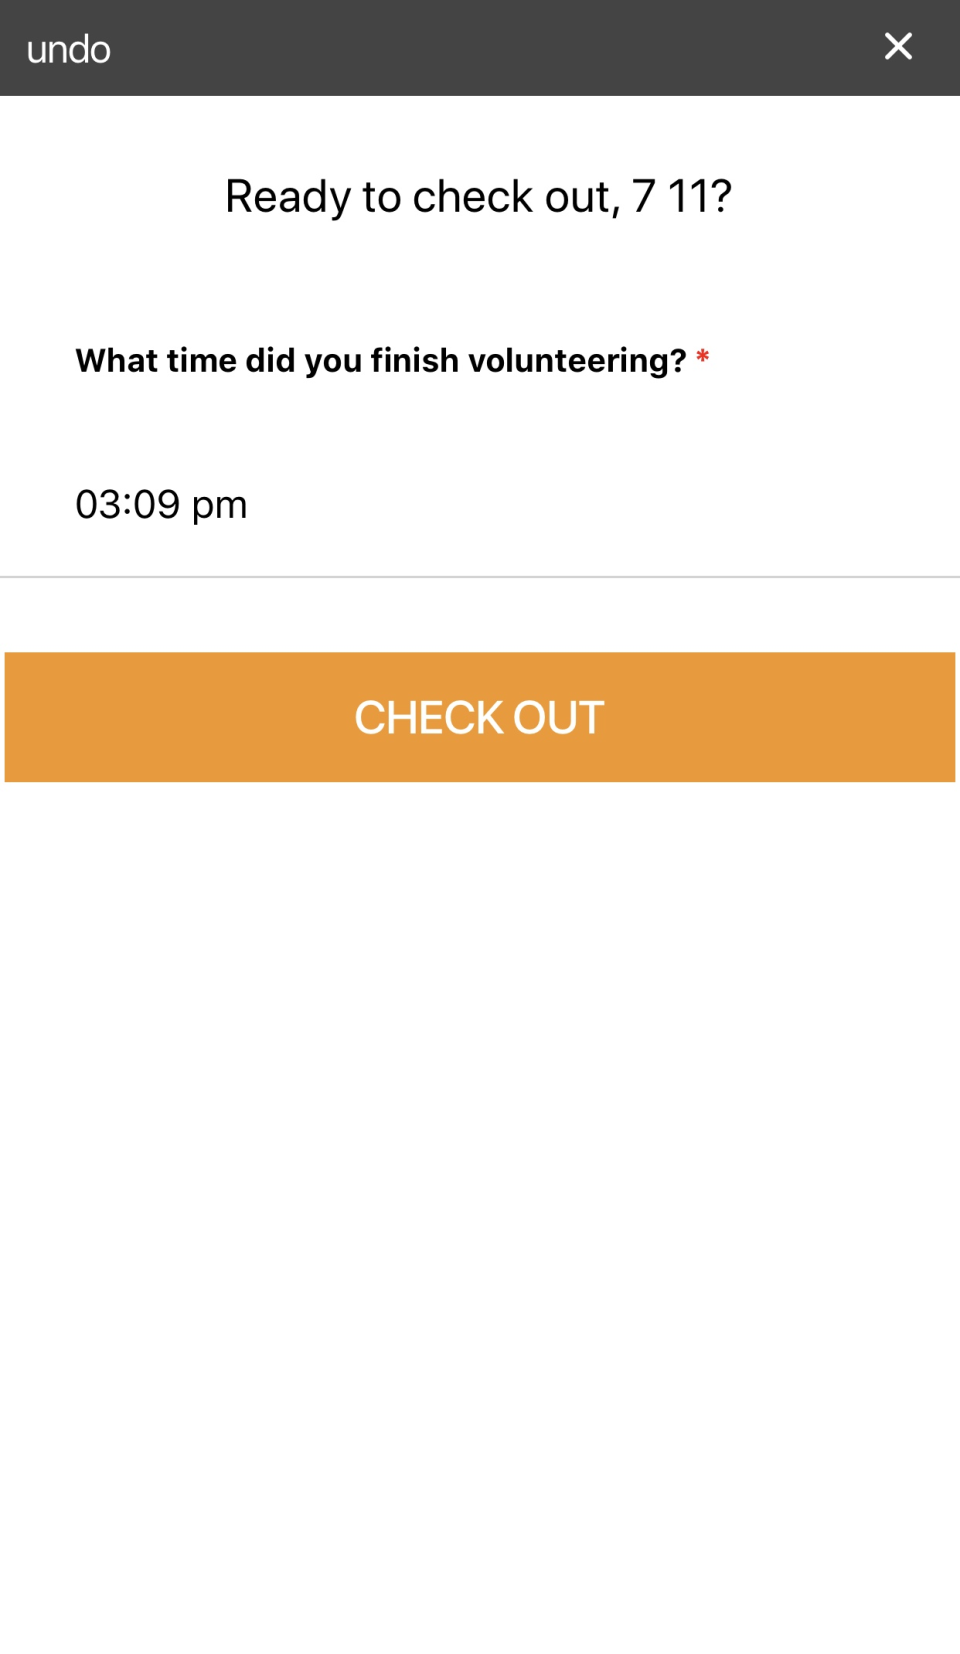 Volunteer Check In Kiosk Software - 2